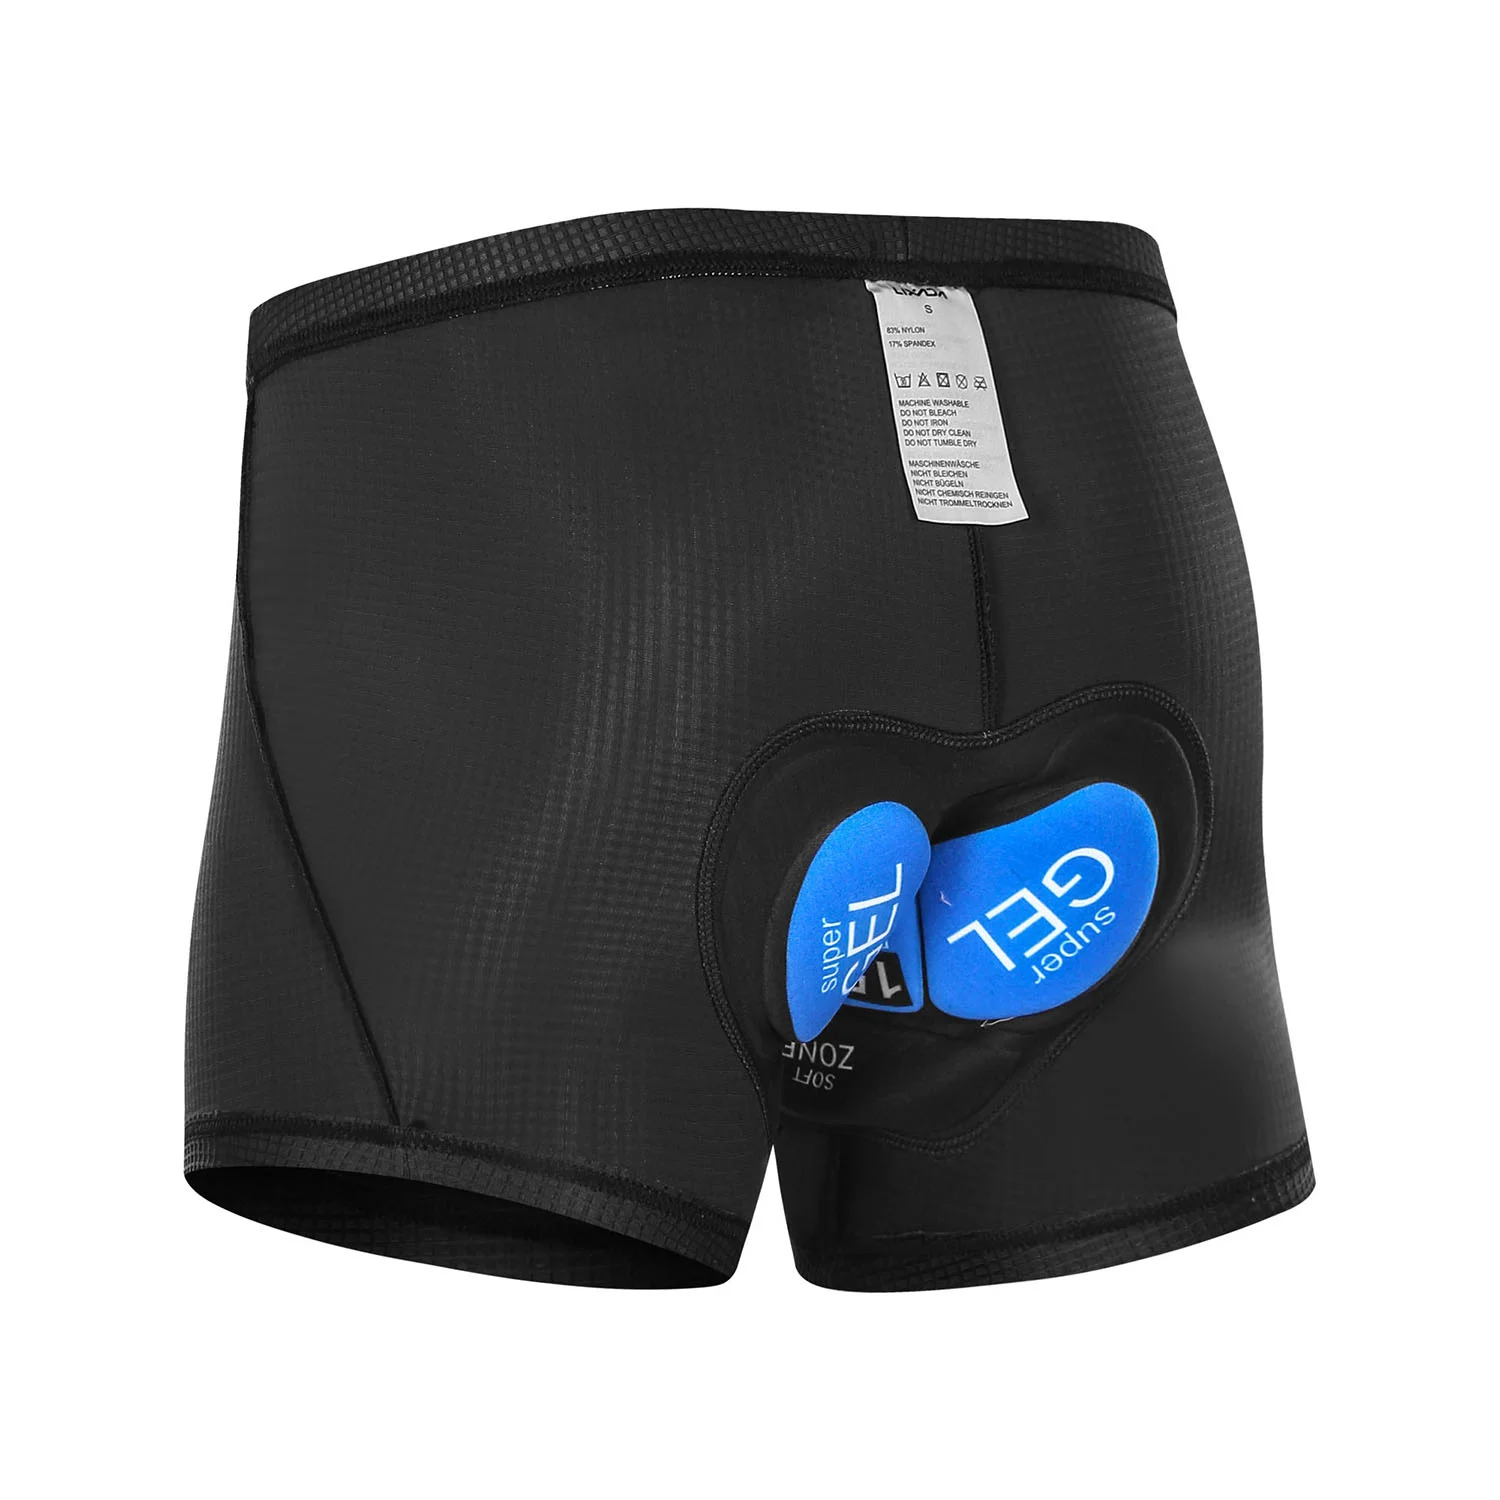 High Quality Comfortable Underwear Sponge Gel 3D Padded Short PantsSize S-XXXL 